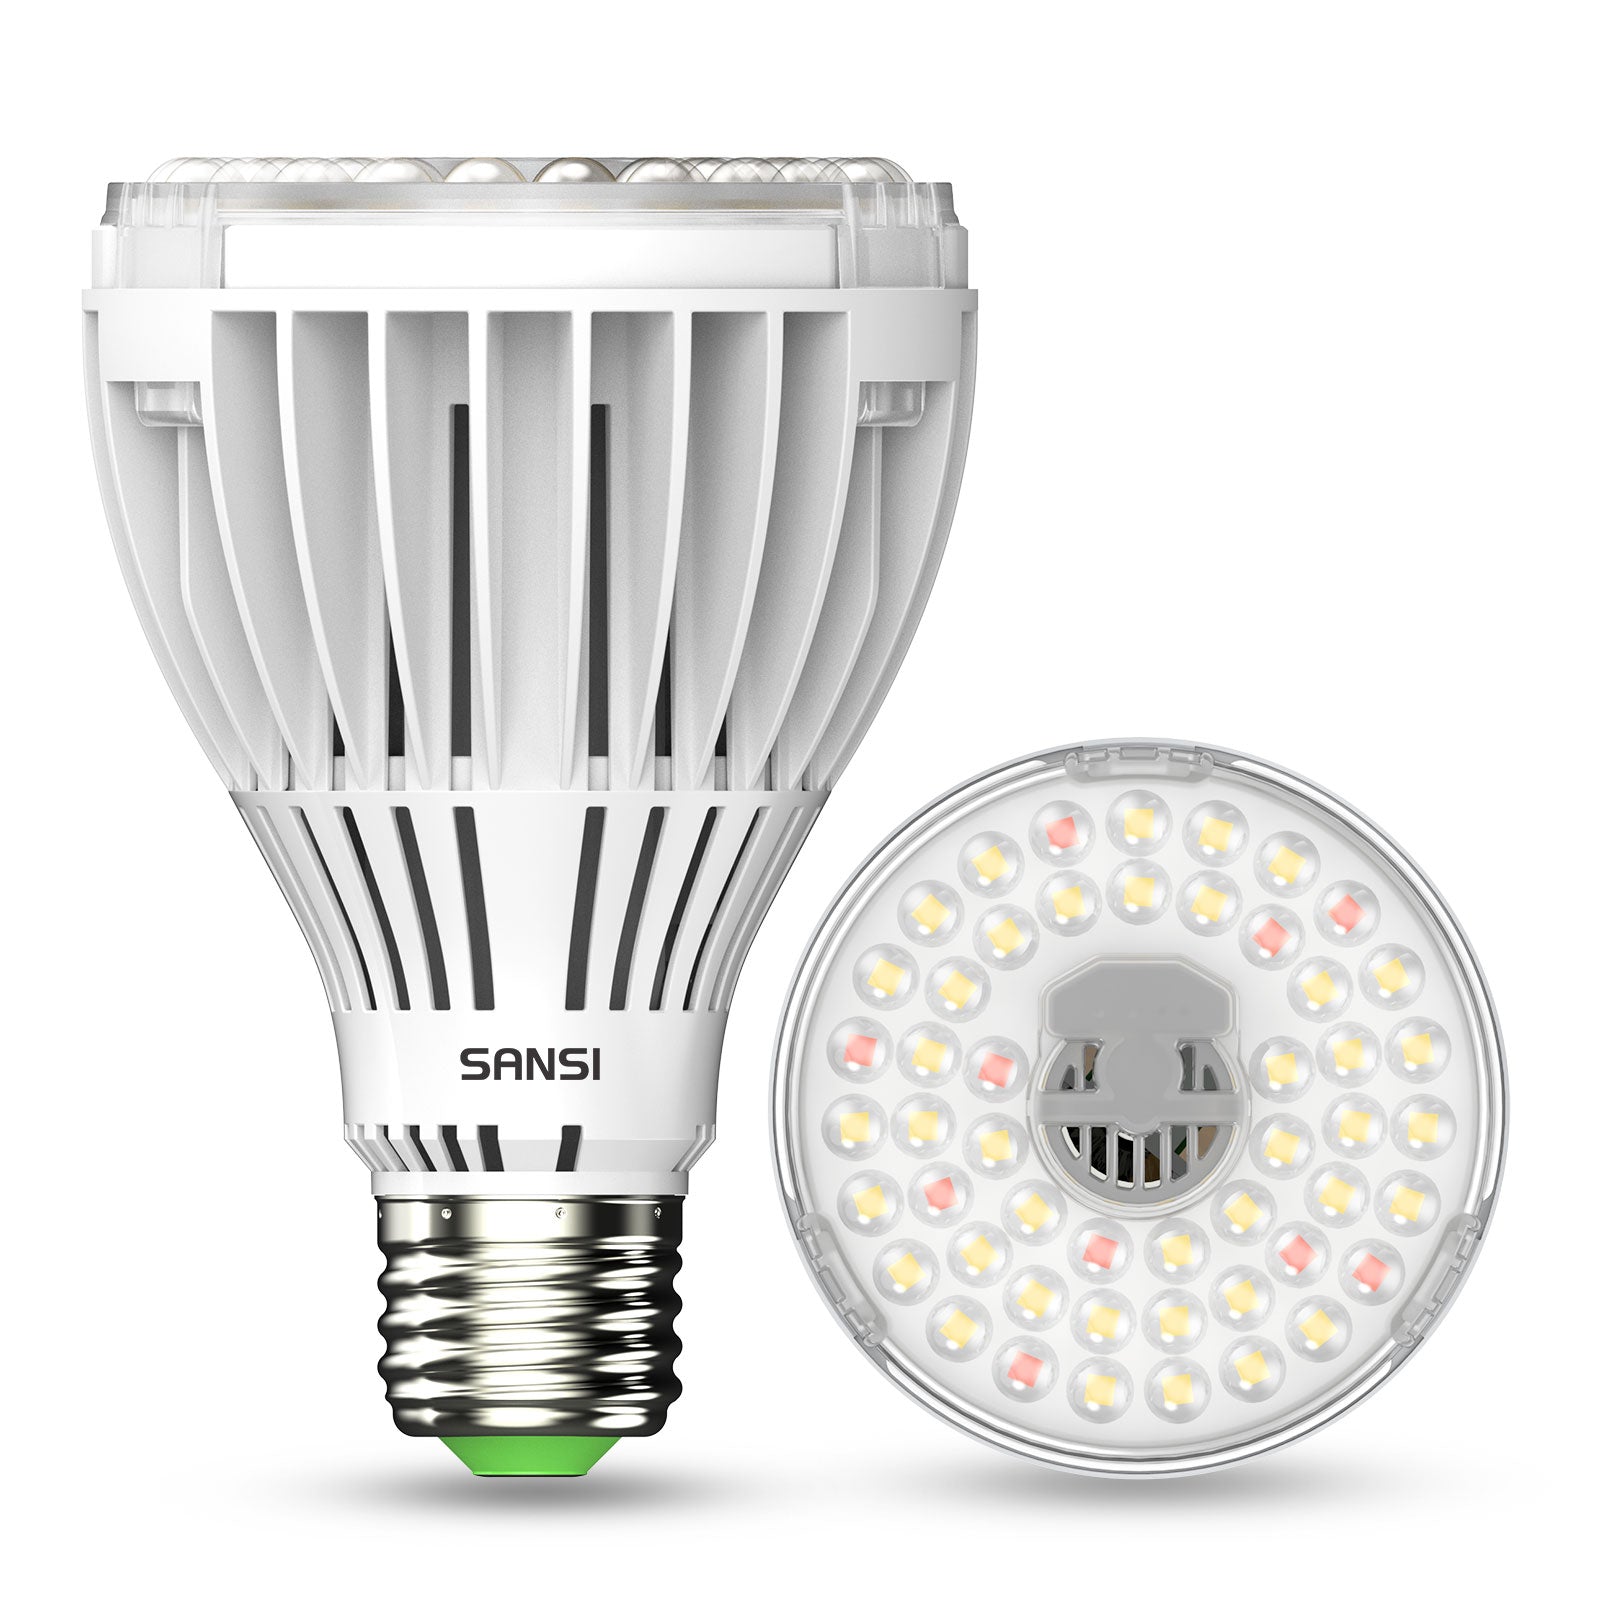 PAR25 30W Led Grow Light Bulb (US ONLY)